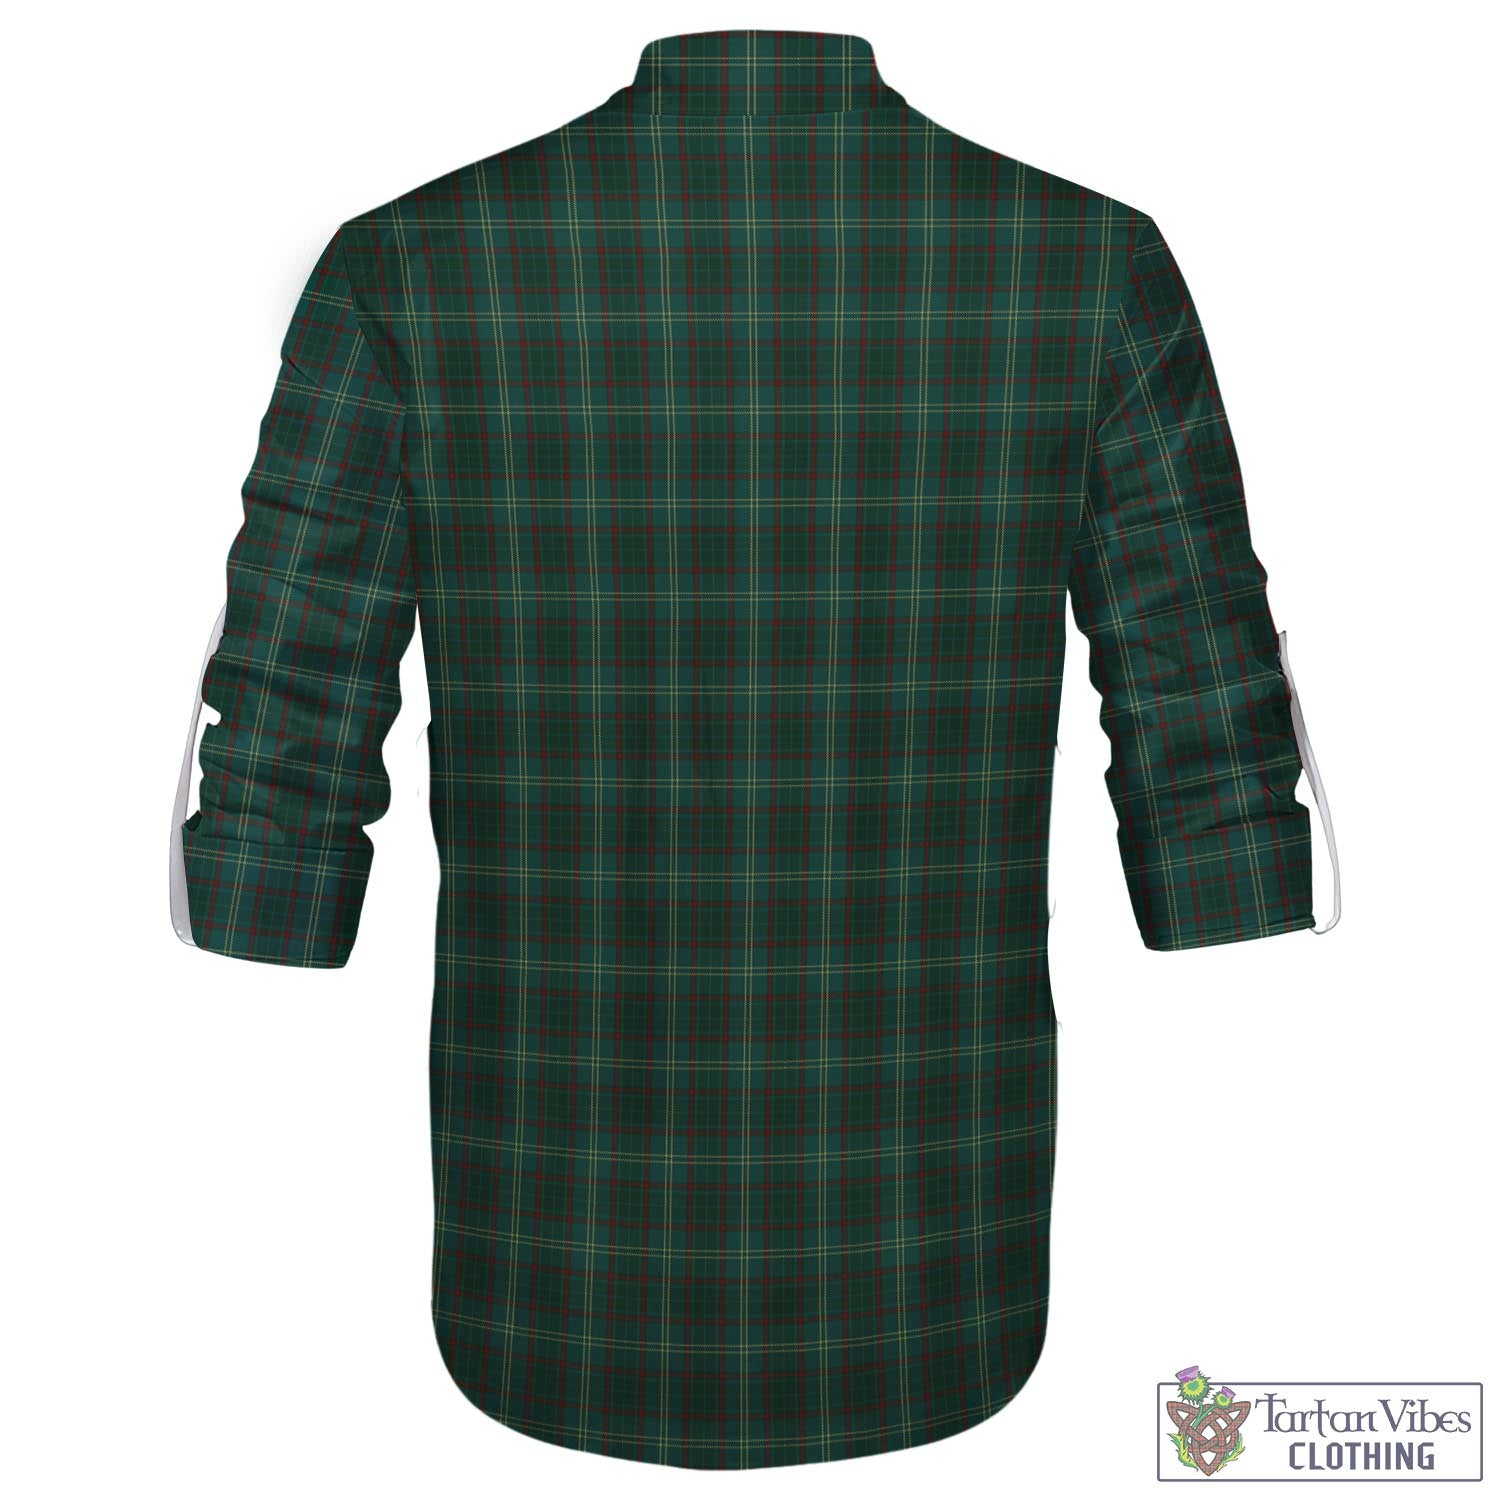 Tartan Vibes Clothing Armagh County Ireland Tartan Men's Scottish Traditional Jacobite Ghillie Kilt Shirt